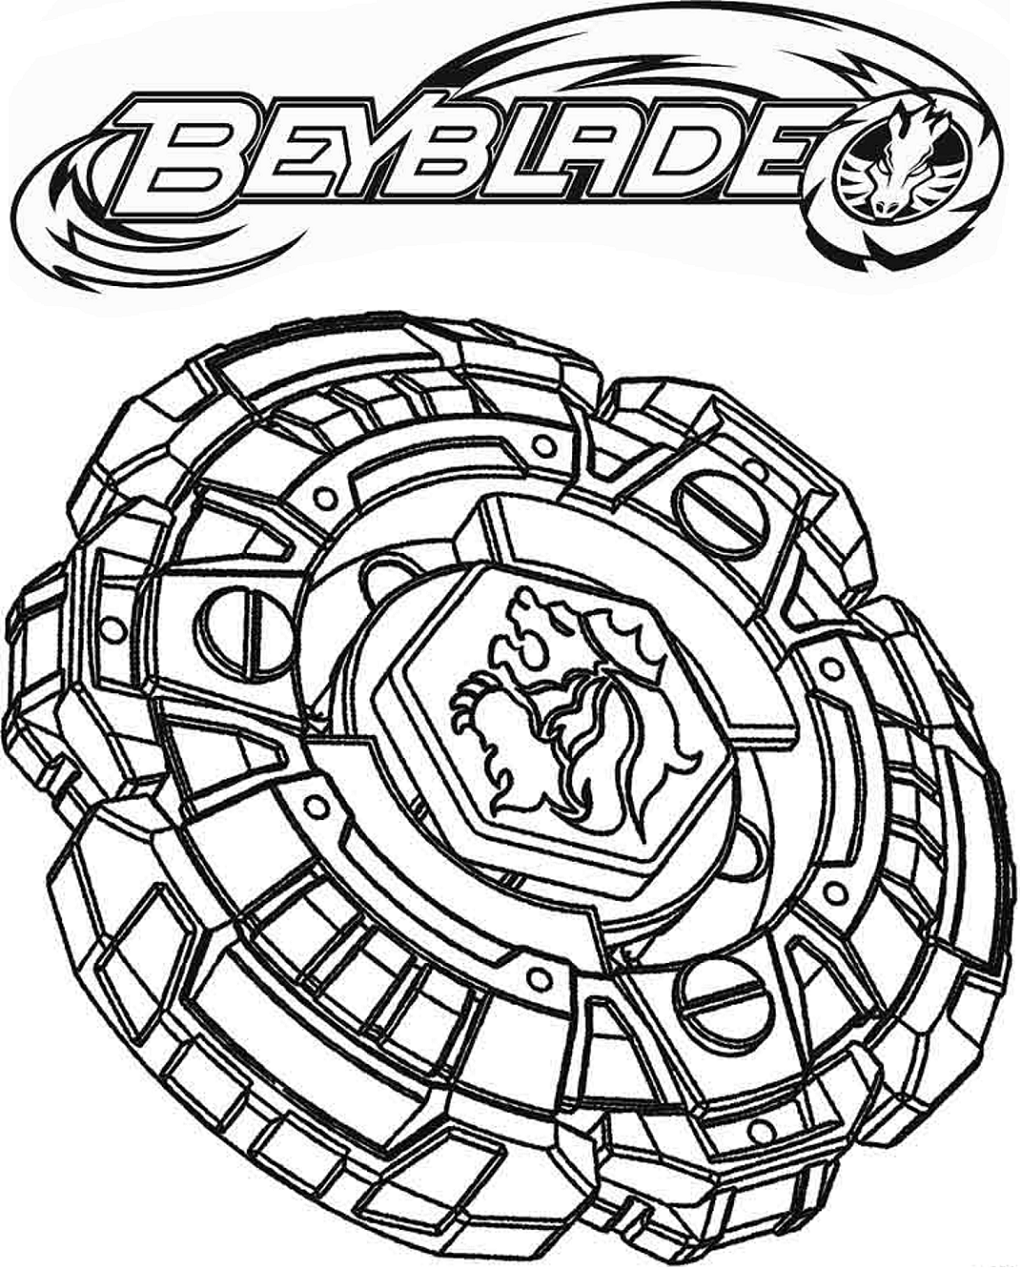 Beyblade Burst Coloring Games - ColoringGames.Net